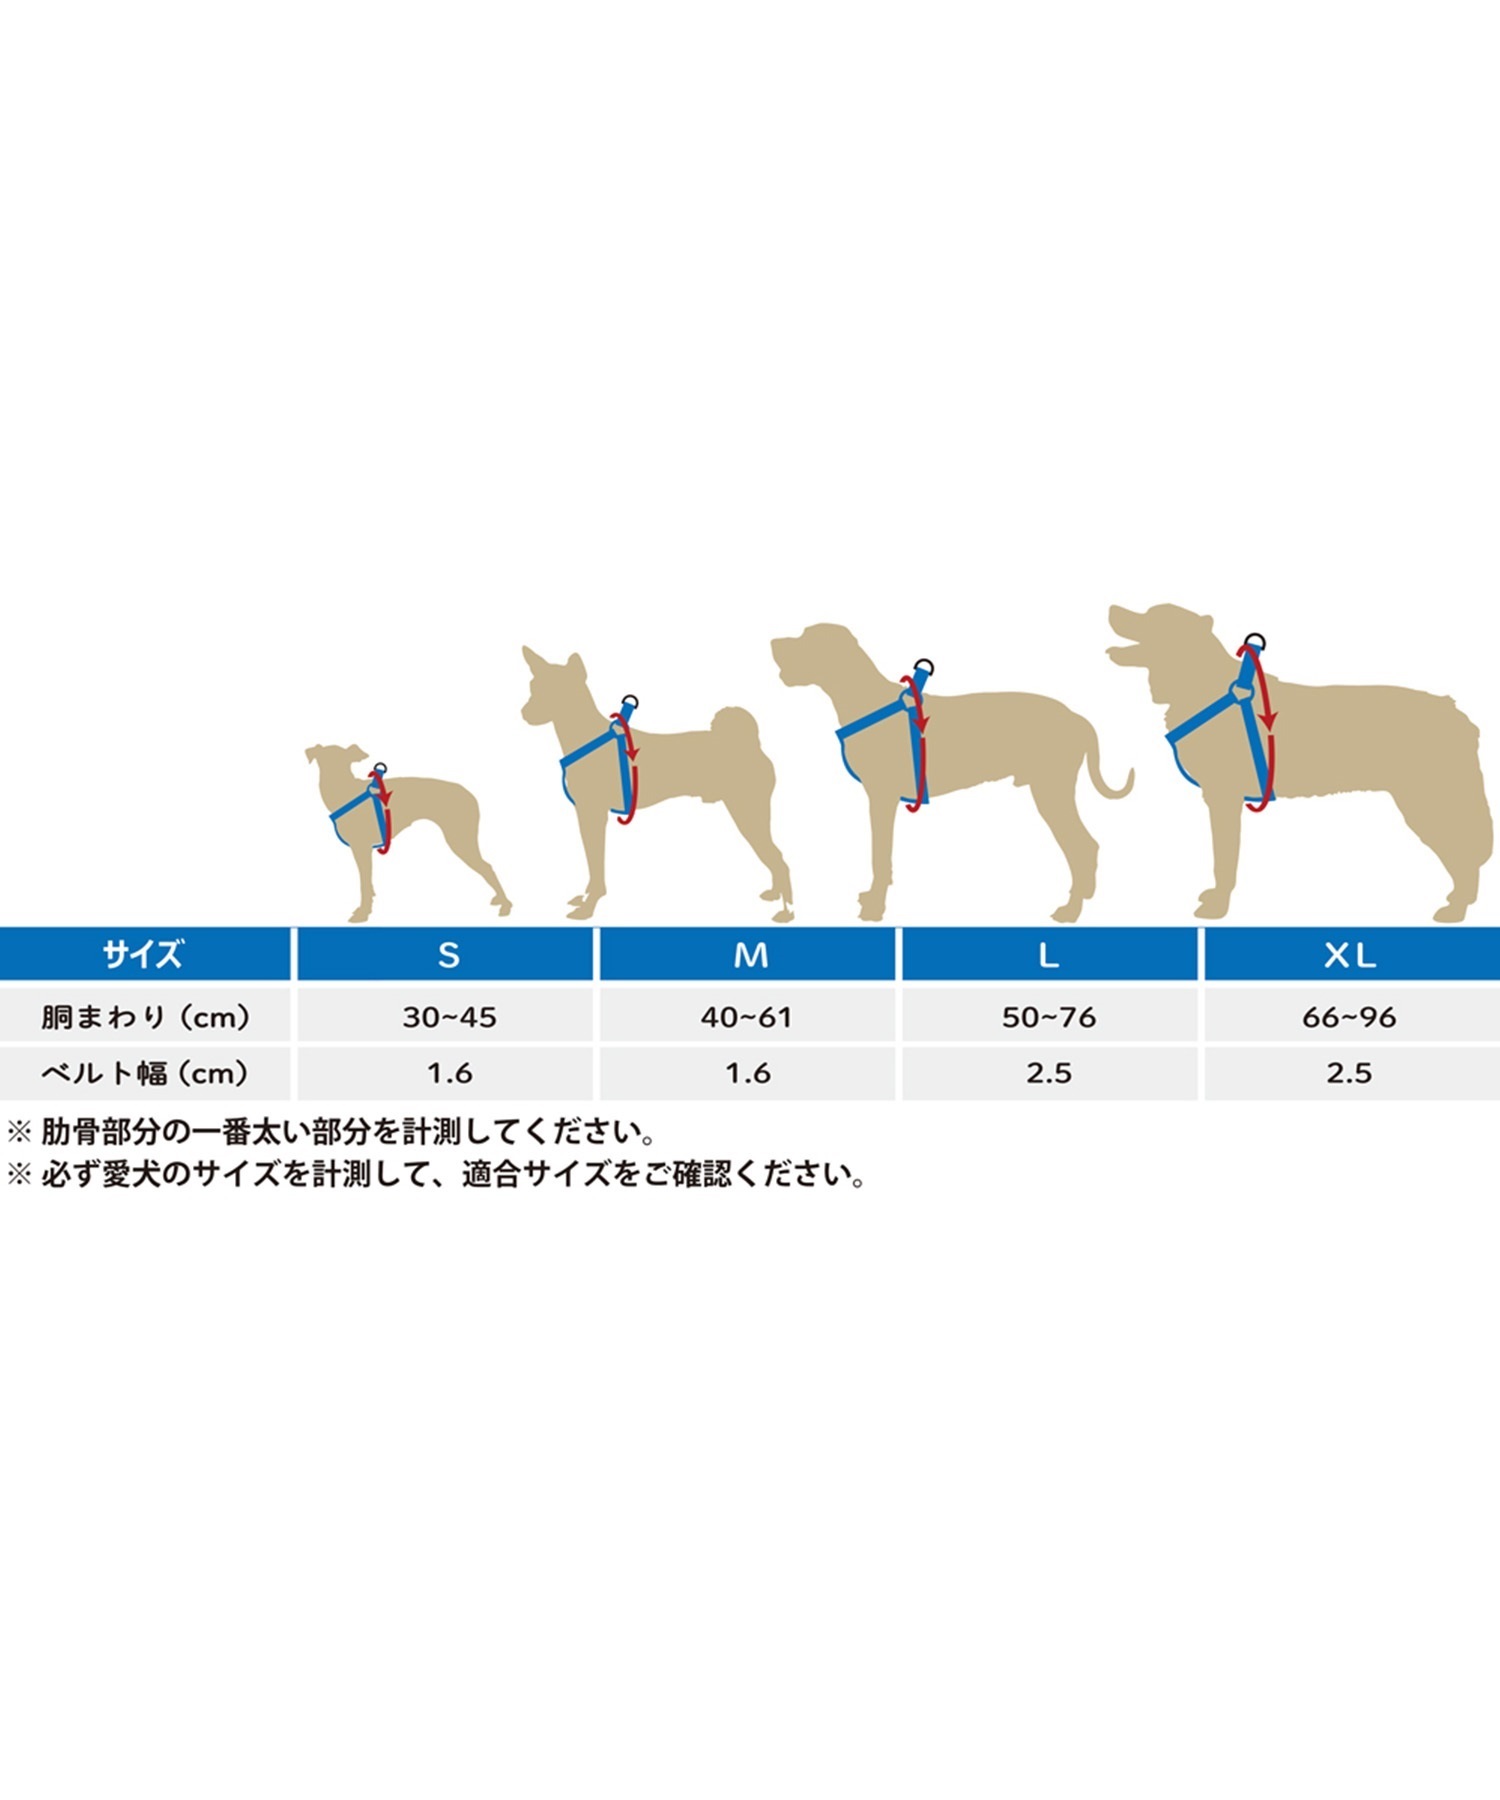 WOLFGANG ウルフギャング 犬用 ハーネス ModernCanvas Harness Sサイズ 超小型犬用 小型犬用 胴輪 モダンキャンバス グリーン系 WH-001-103(GR-S)